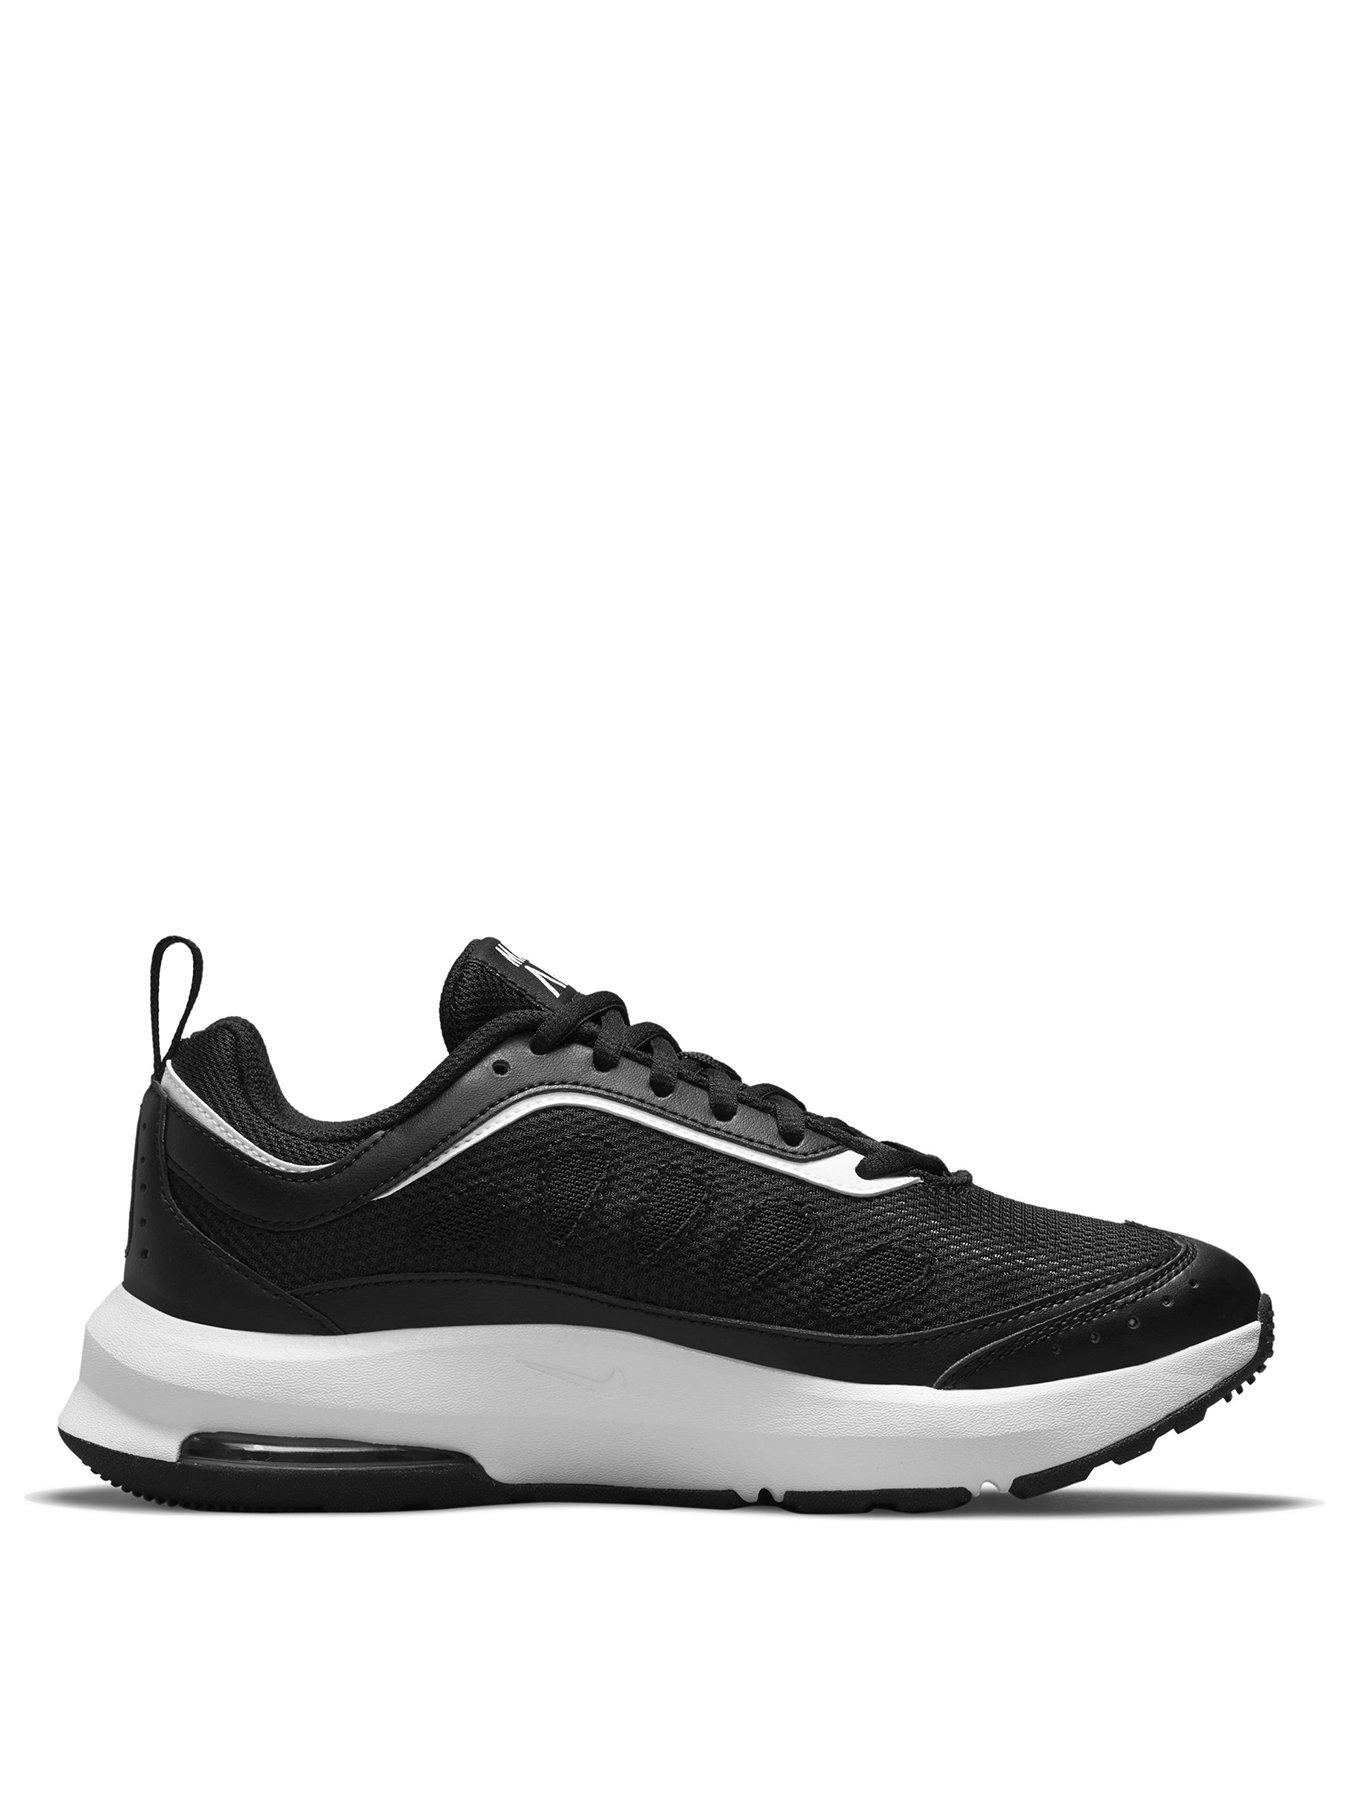 Nike Air Max Ap - Black/White